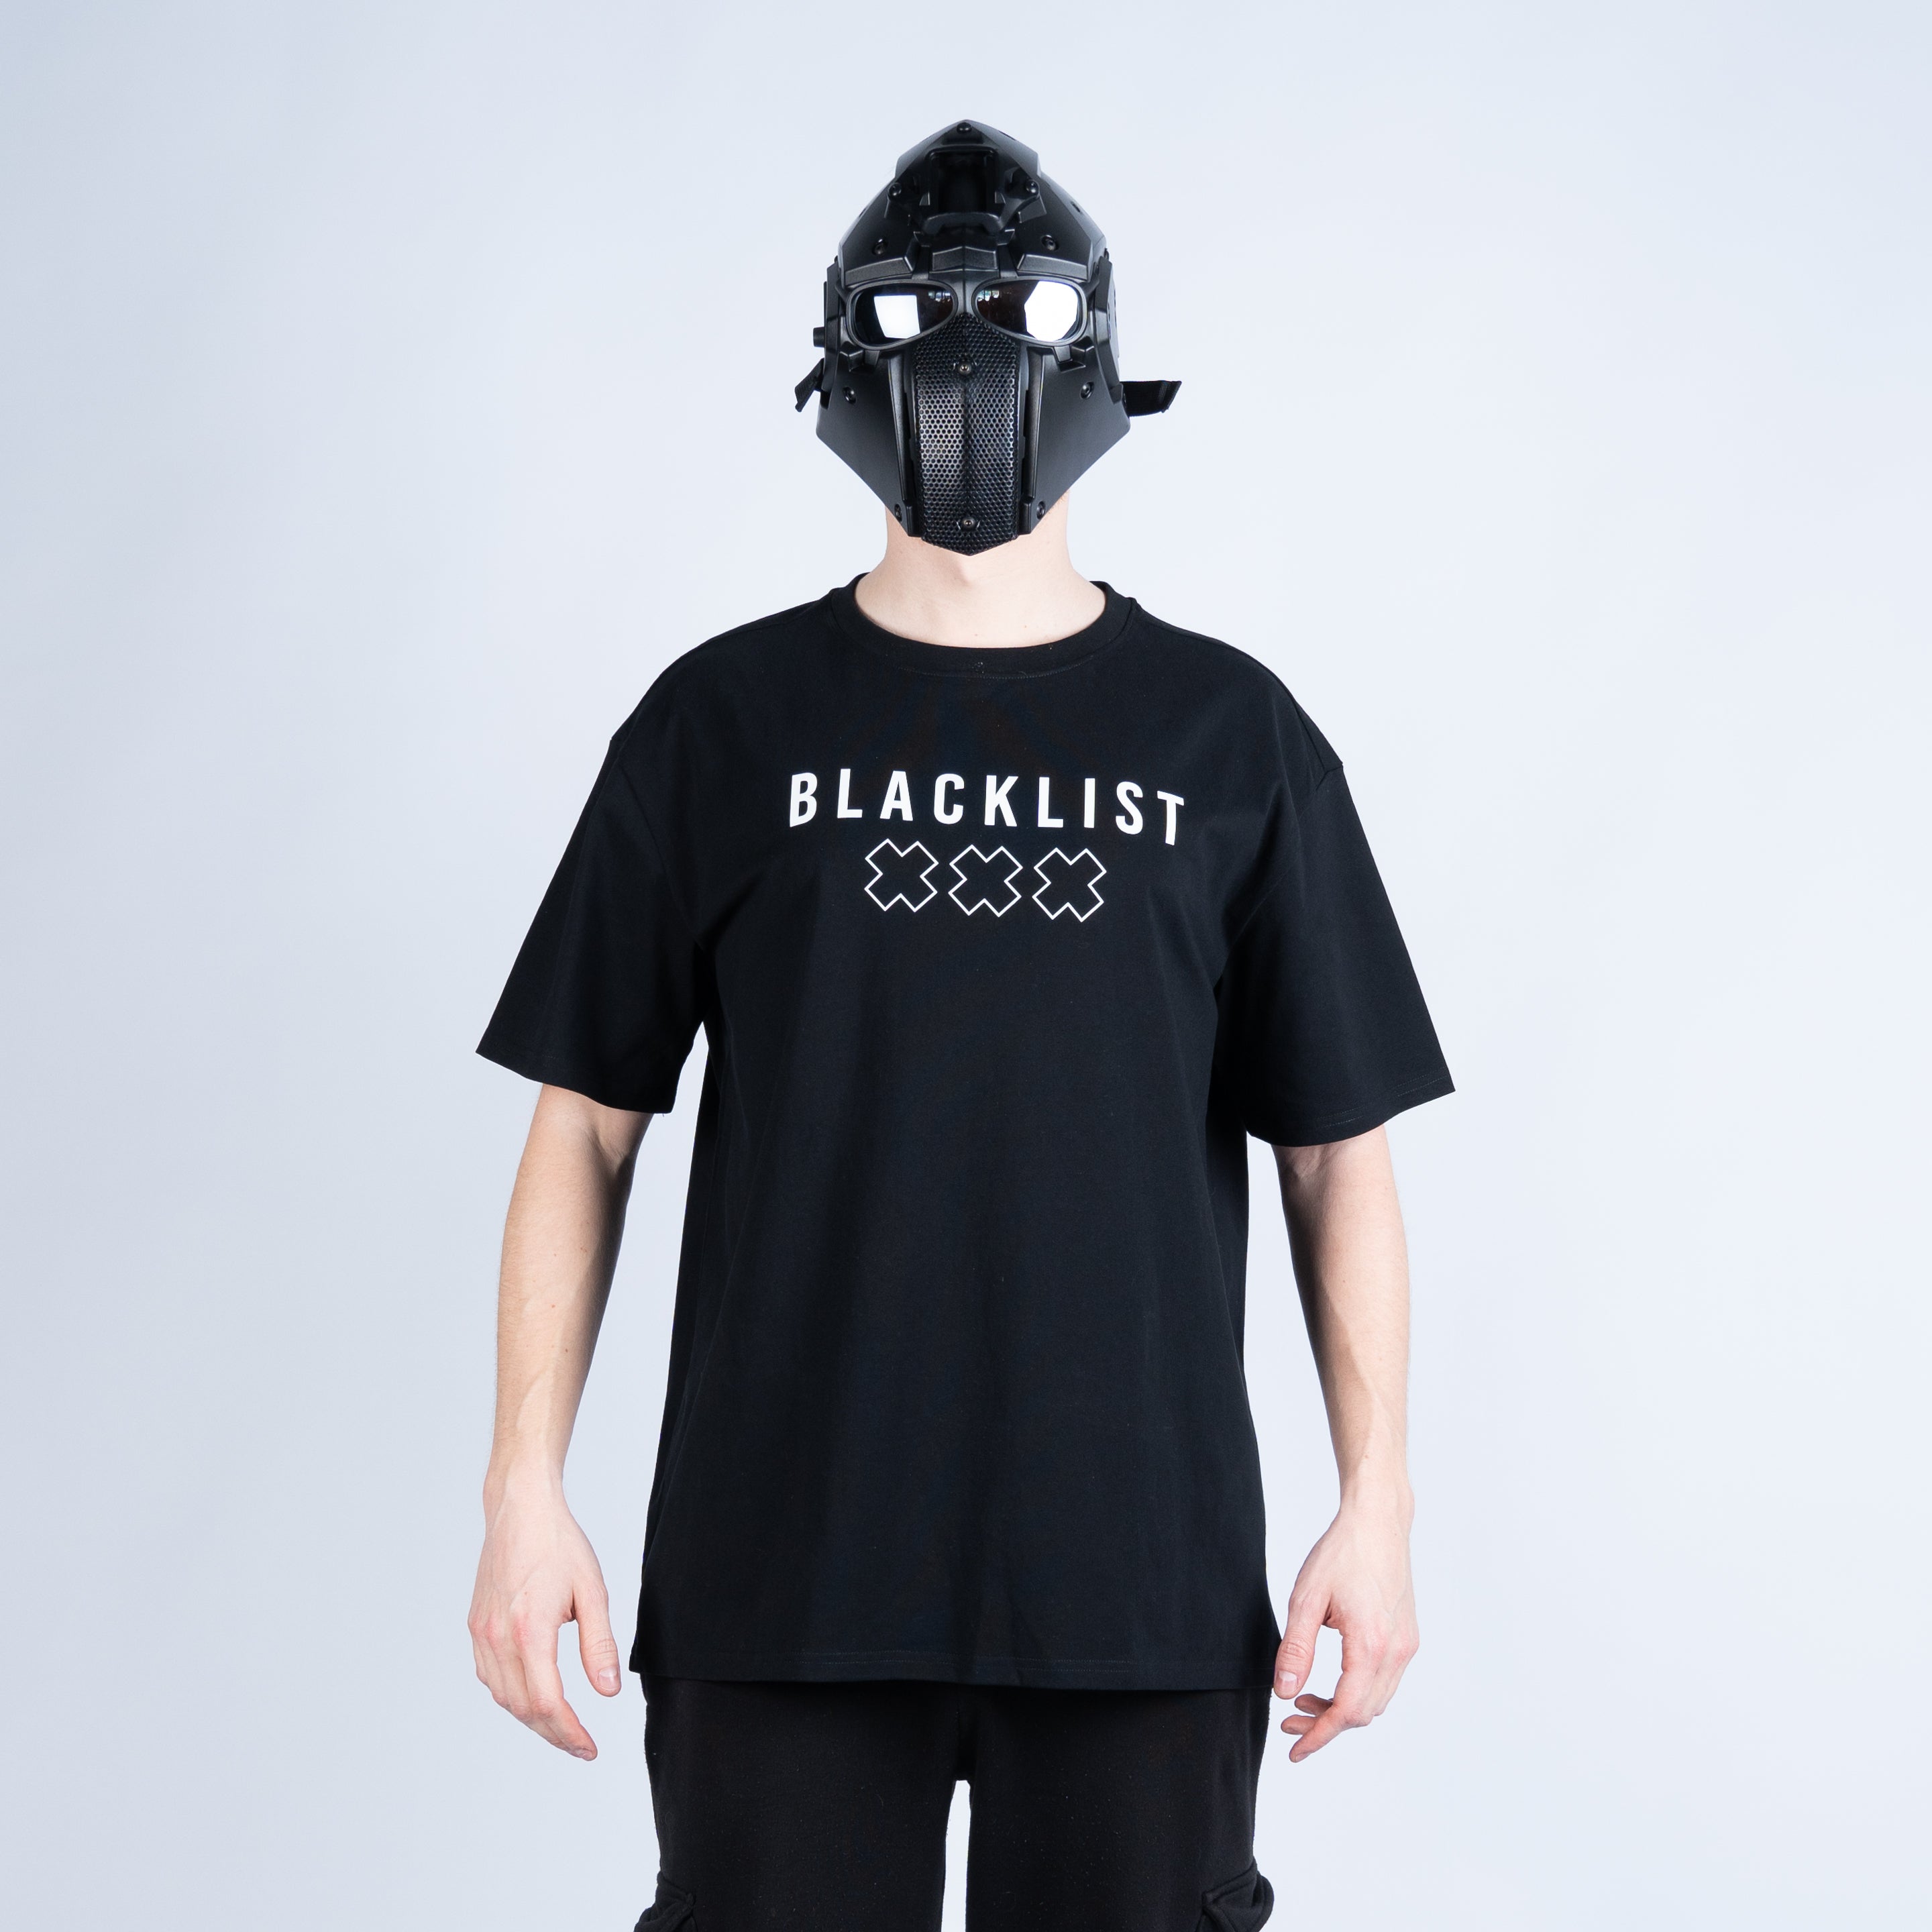 Blacklist - Fam Shirt